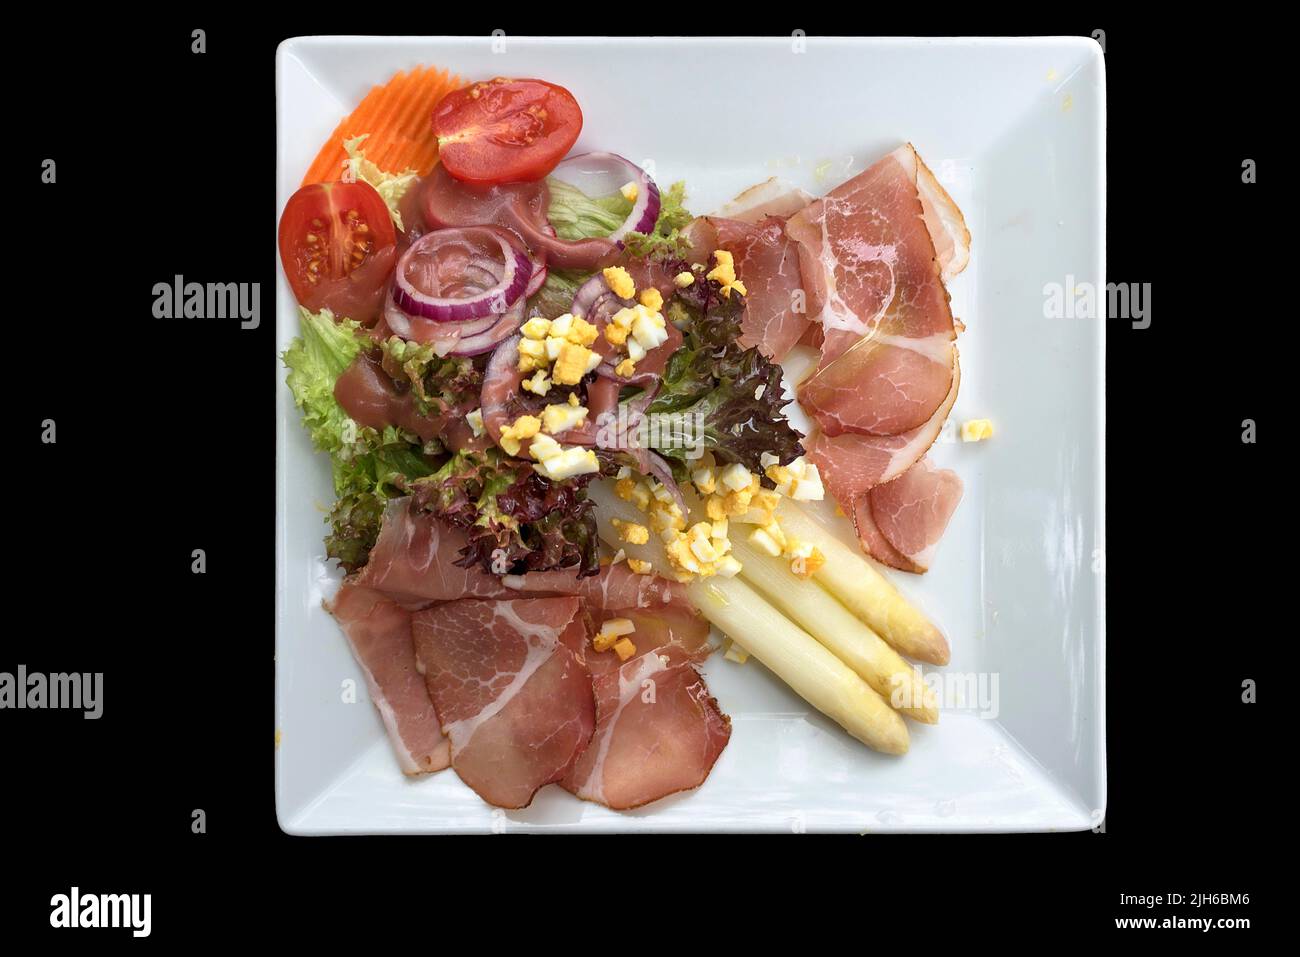 Asparagus salad with ham on a black background, Bavaria, Germany Stock Photo